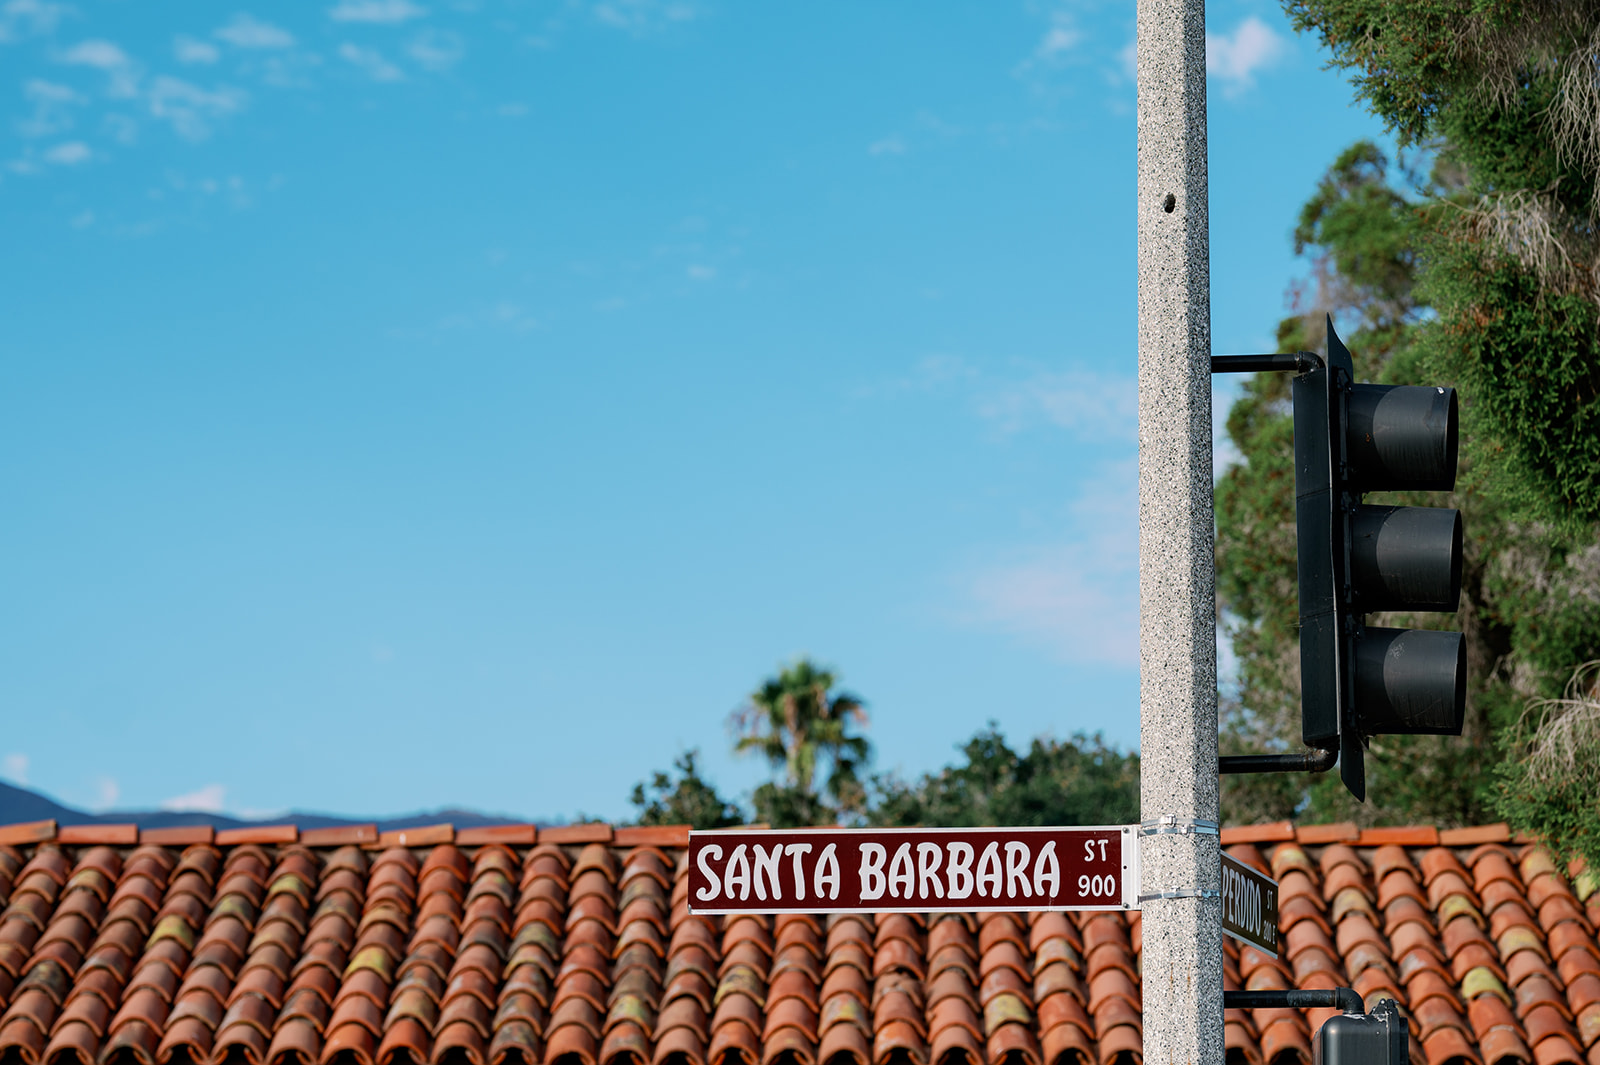 Santa Barbara street sign. 